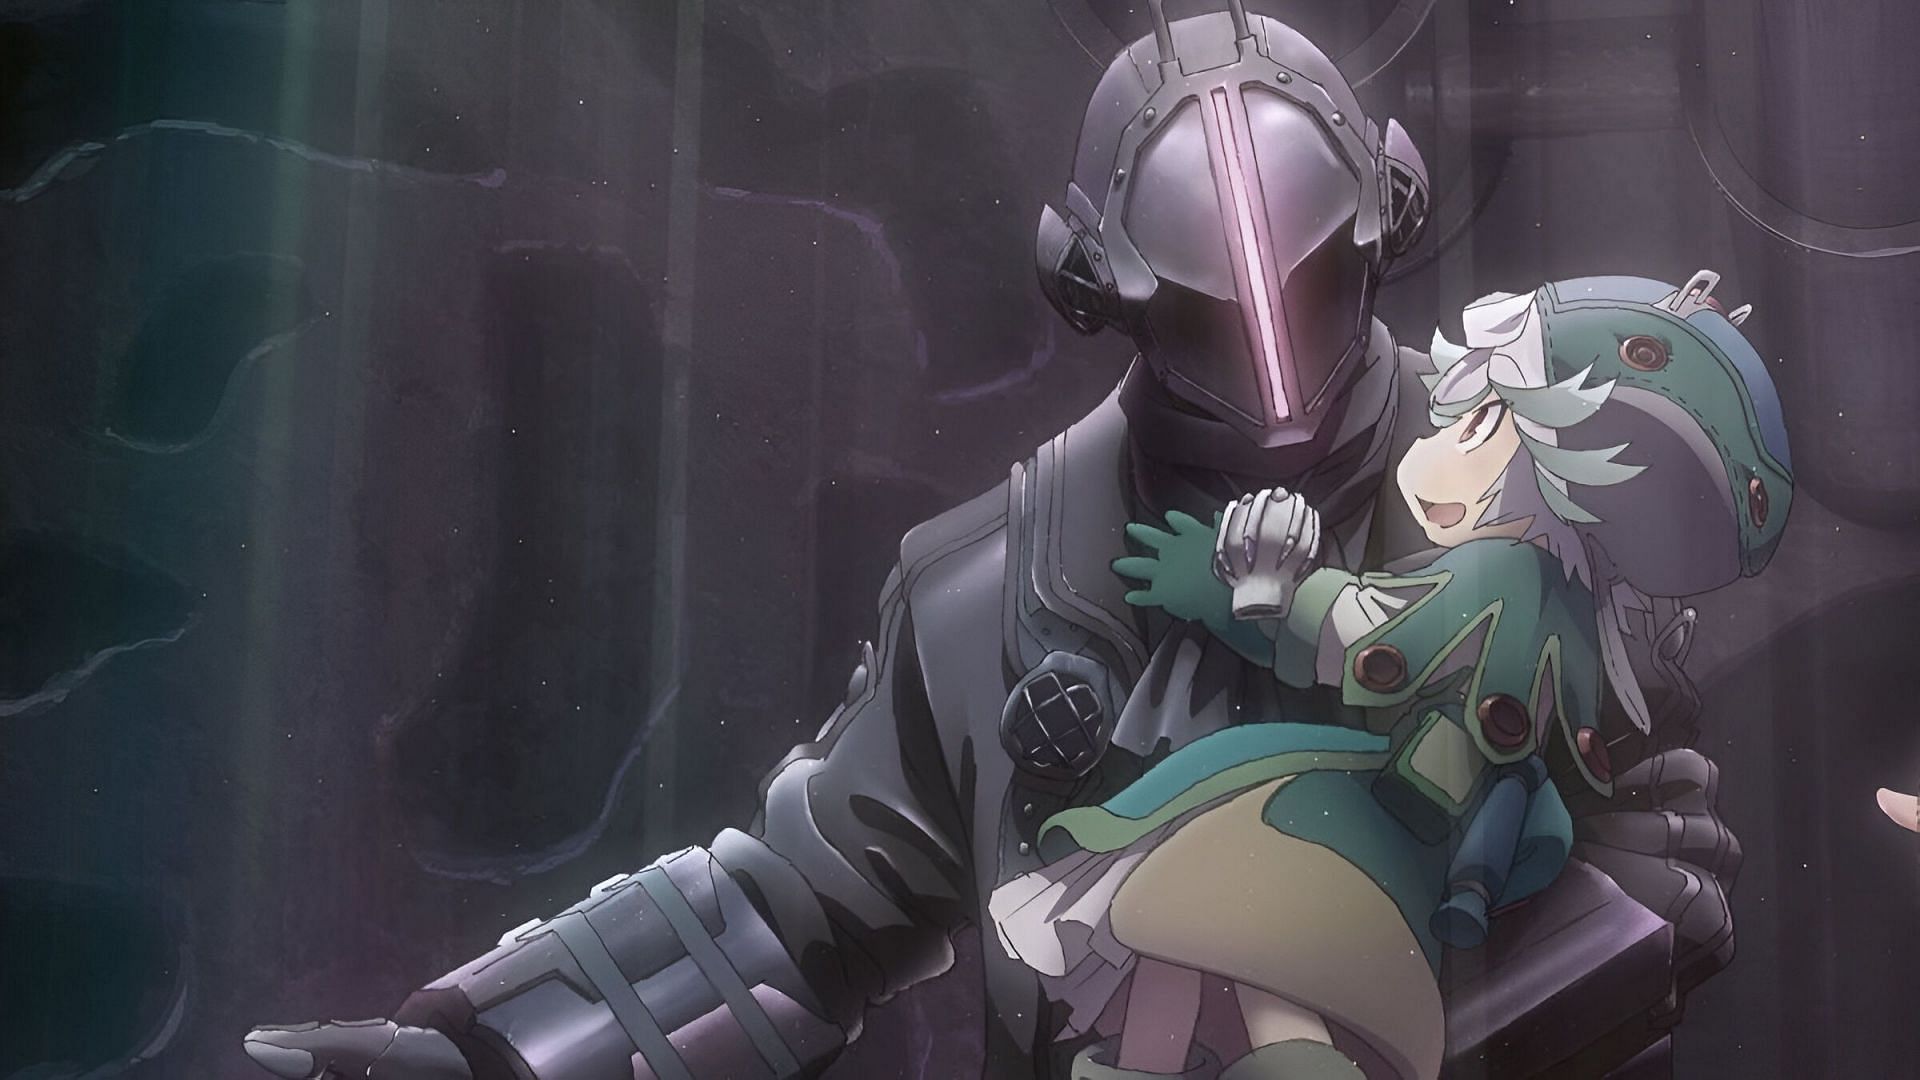 Bondrewd holding Prushka as seen in the anime (Image via Kinema Citrus)